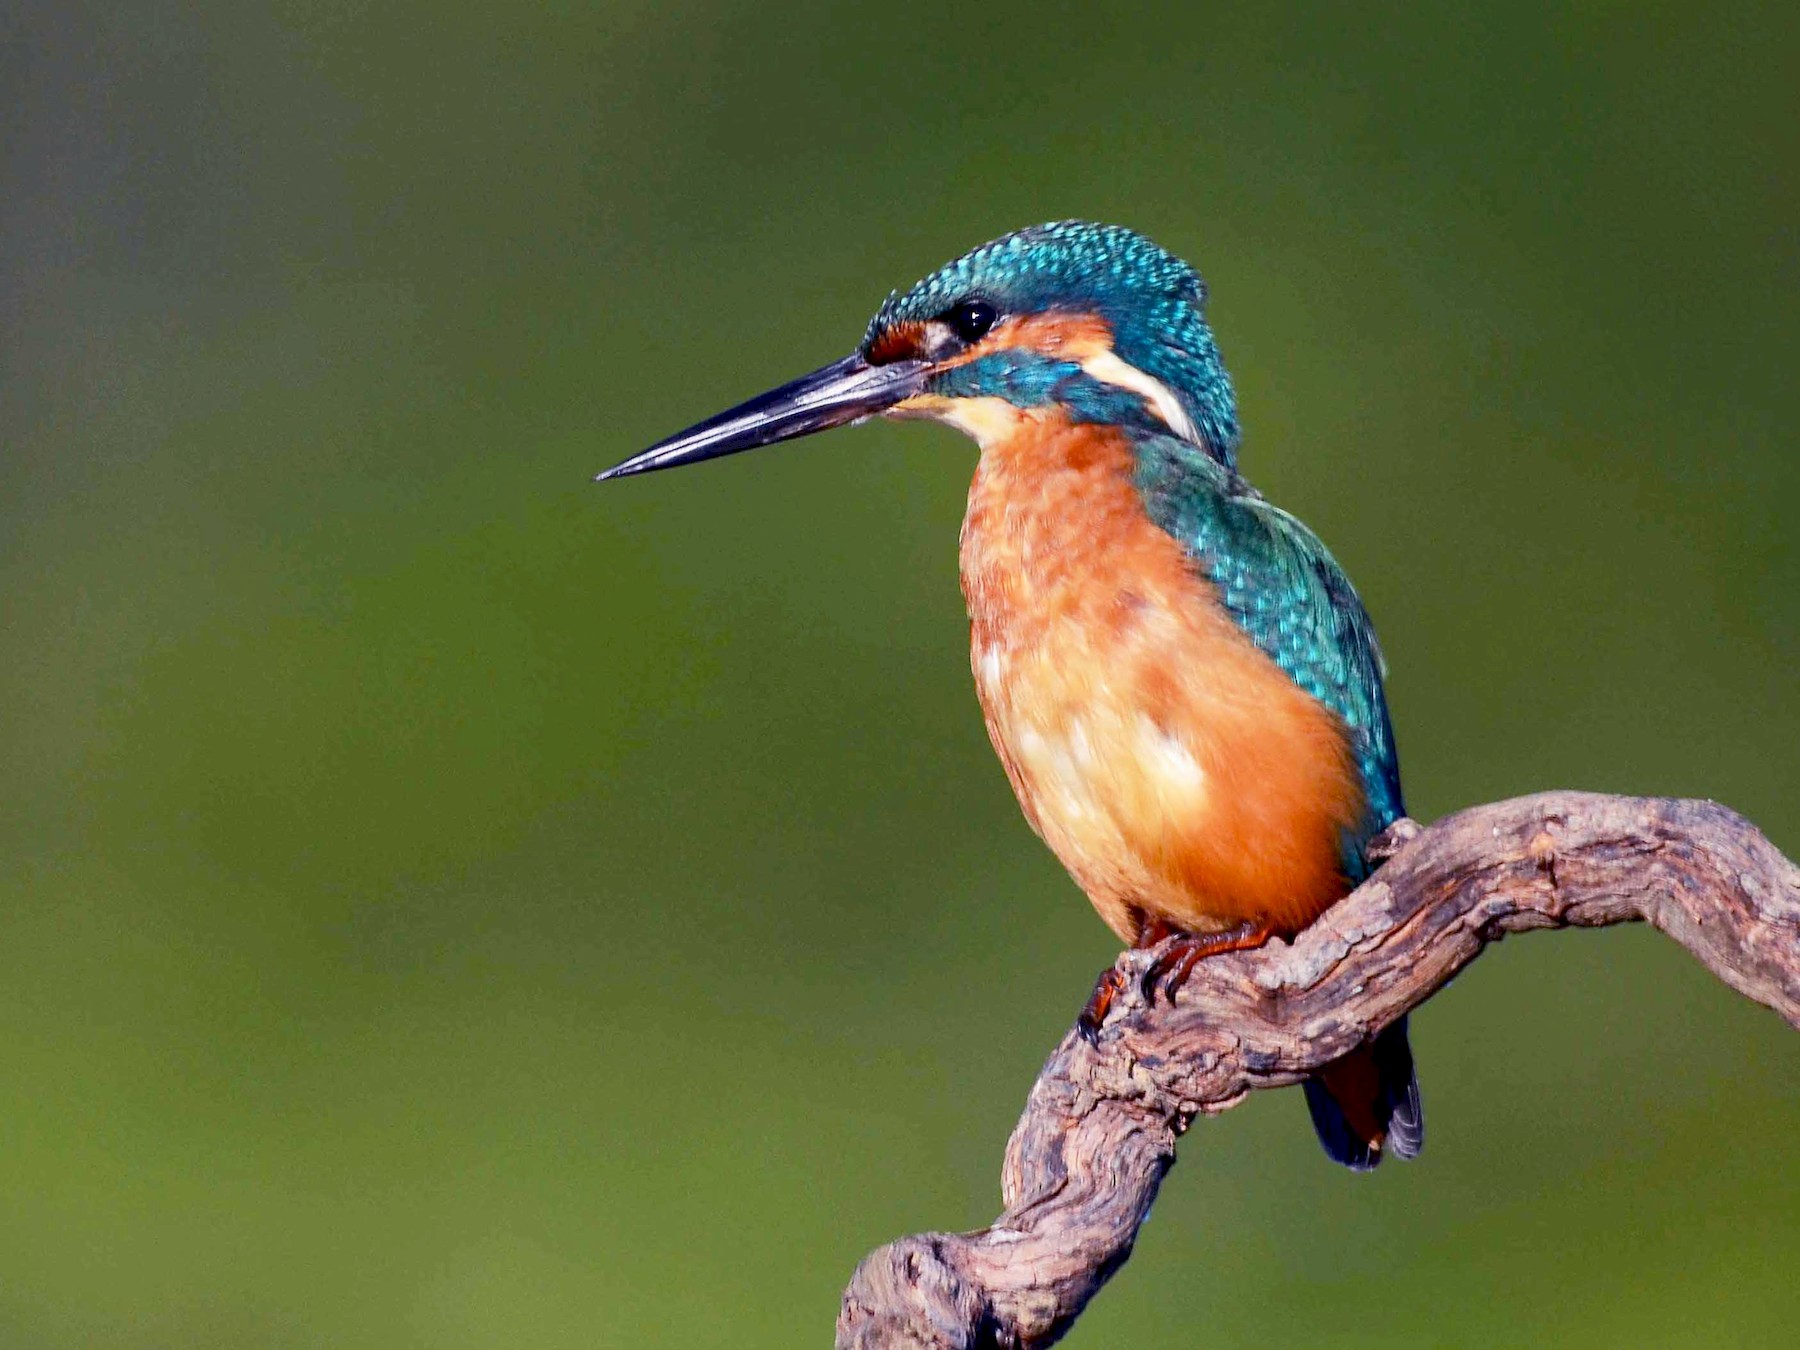 Common Kingfisher - José Frade